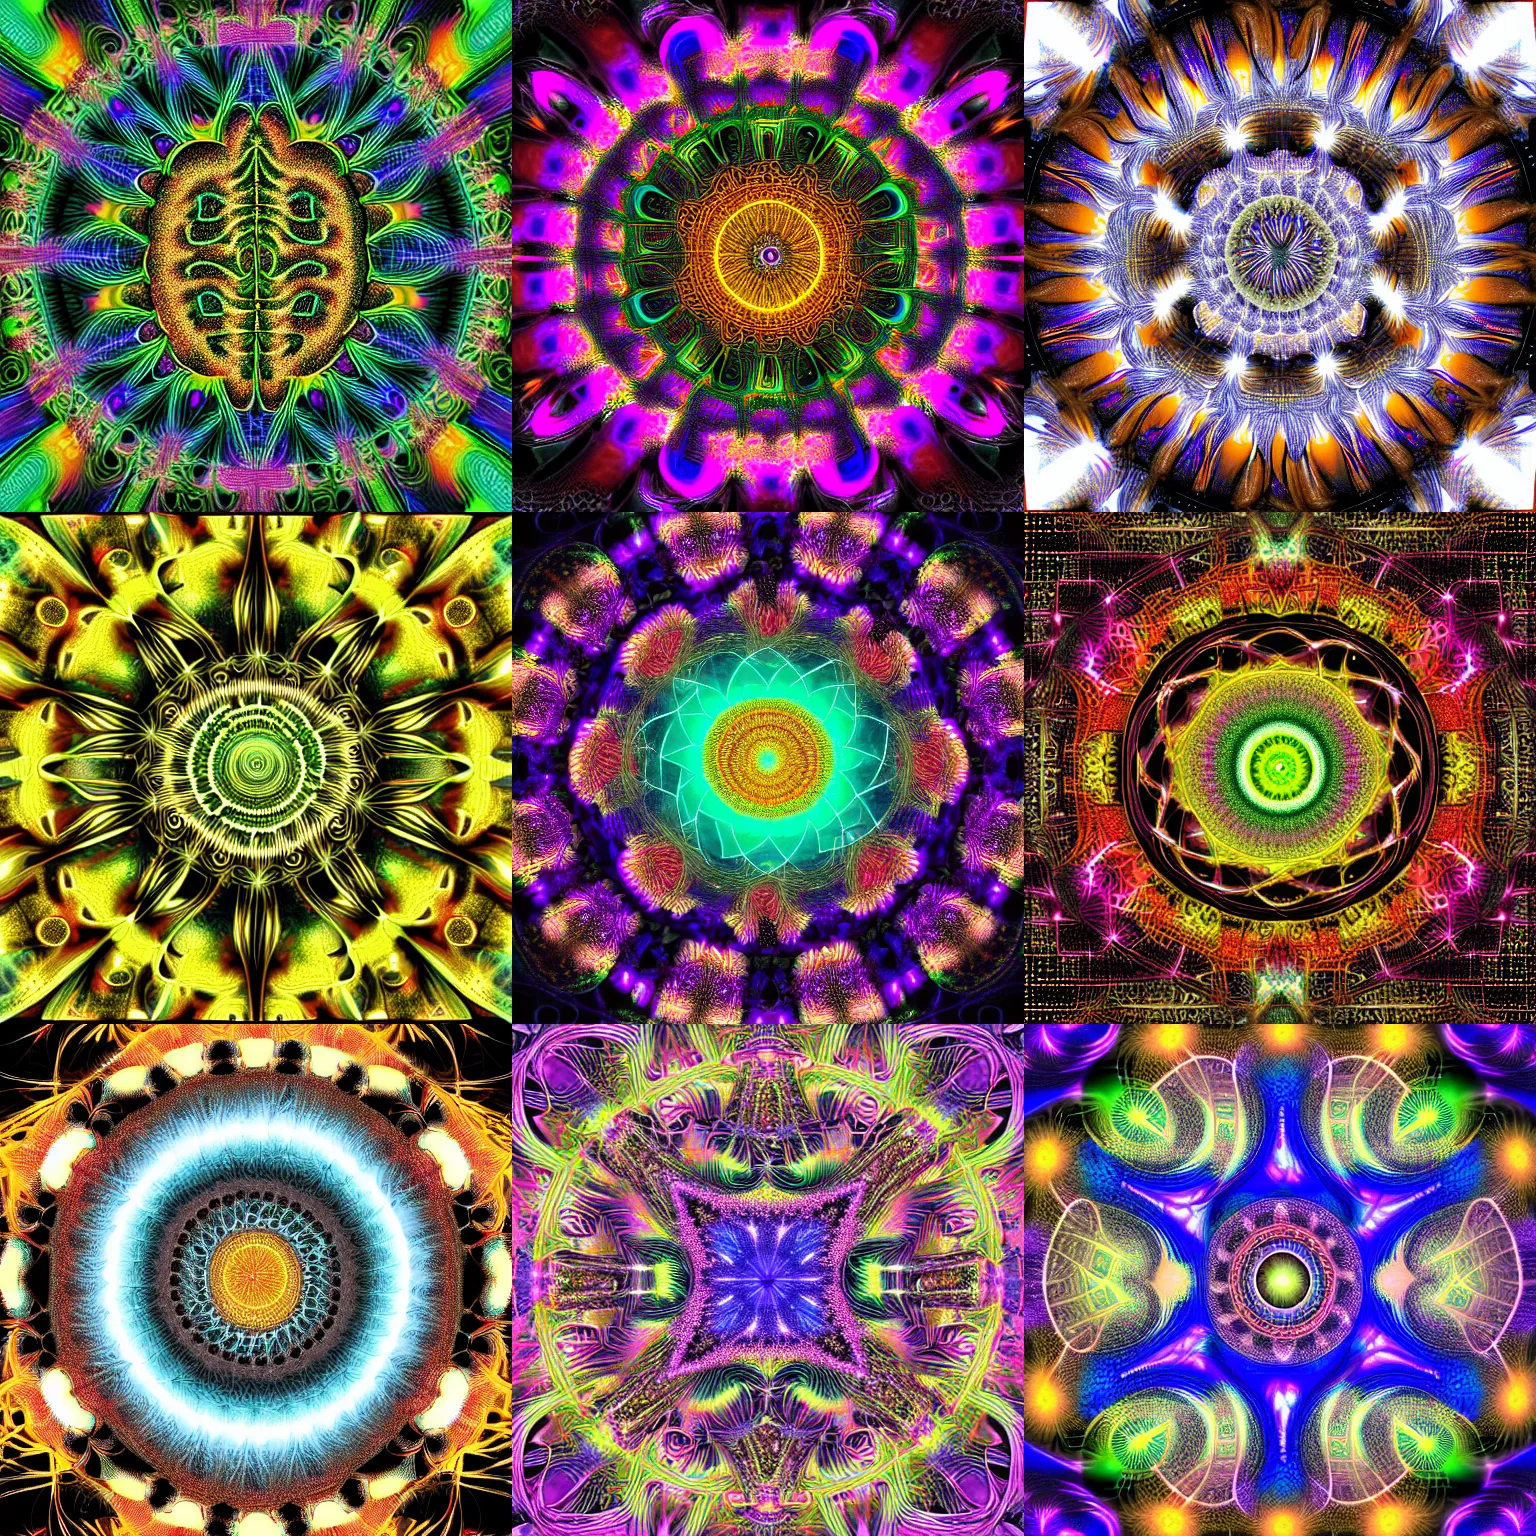 Prompt: buddhabrot fractal, mathematics art, high quality